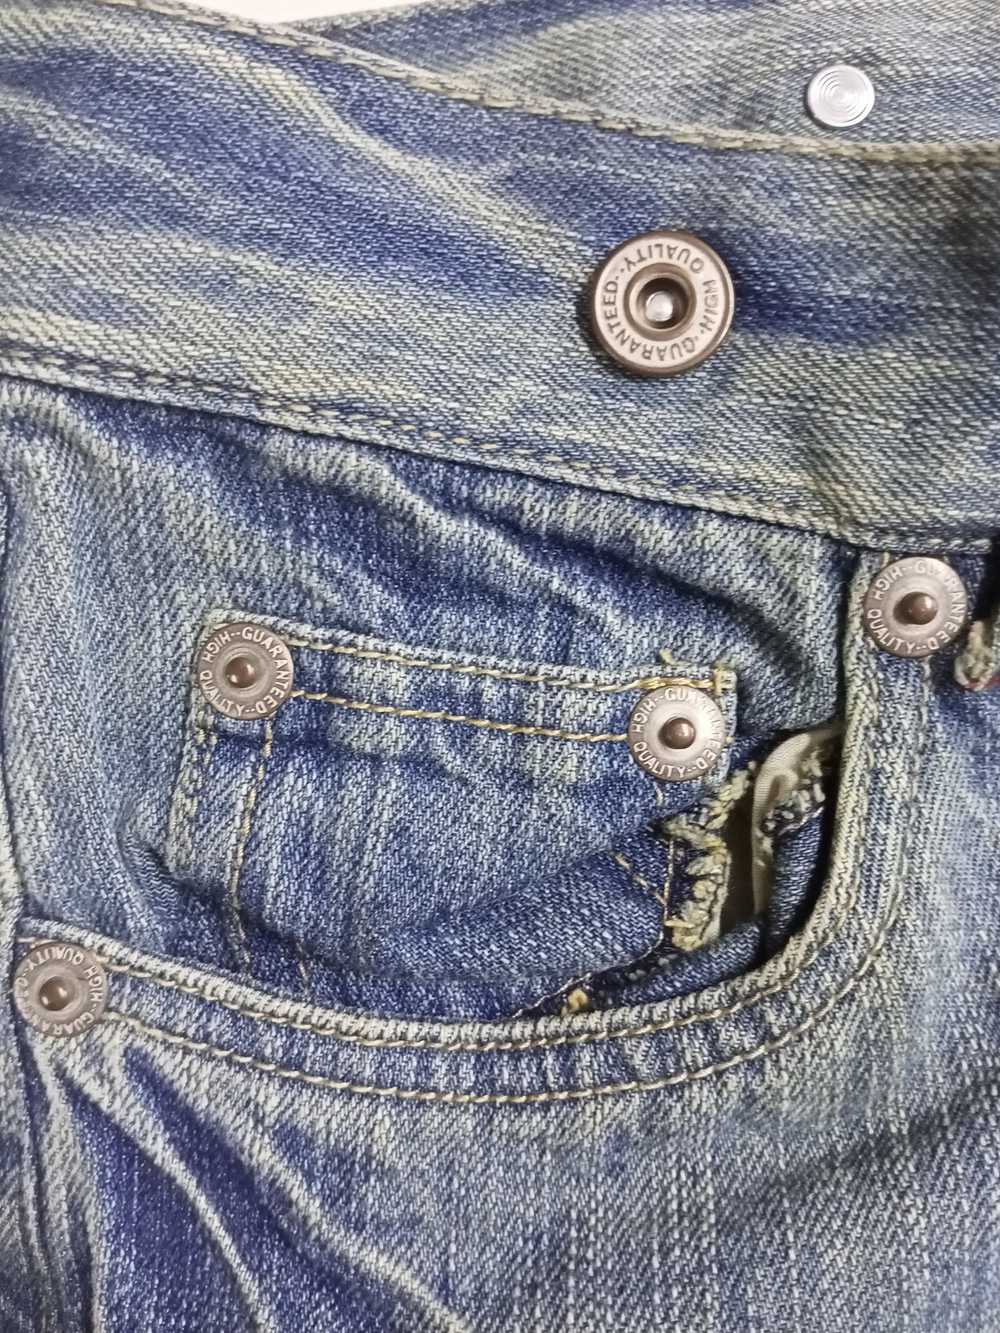 Distressed Denim Hig quality guaranteed jeans - image 5